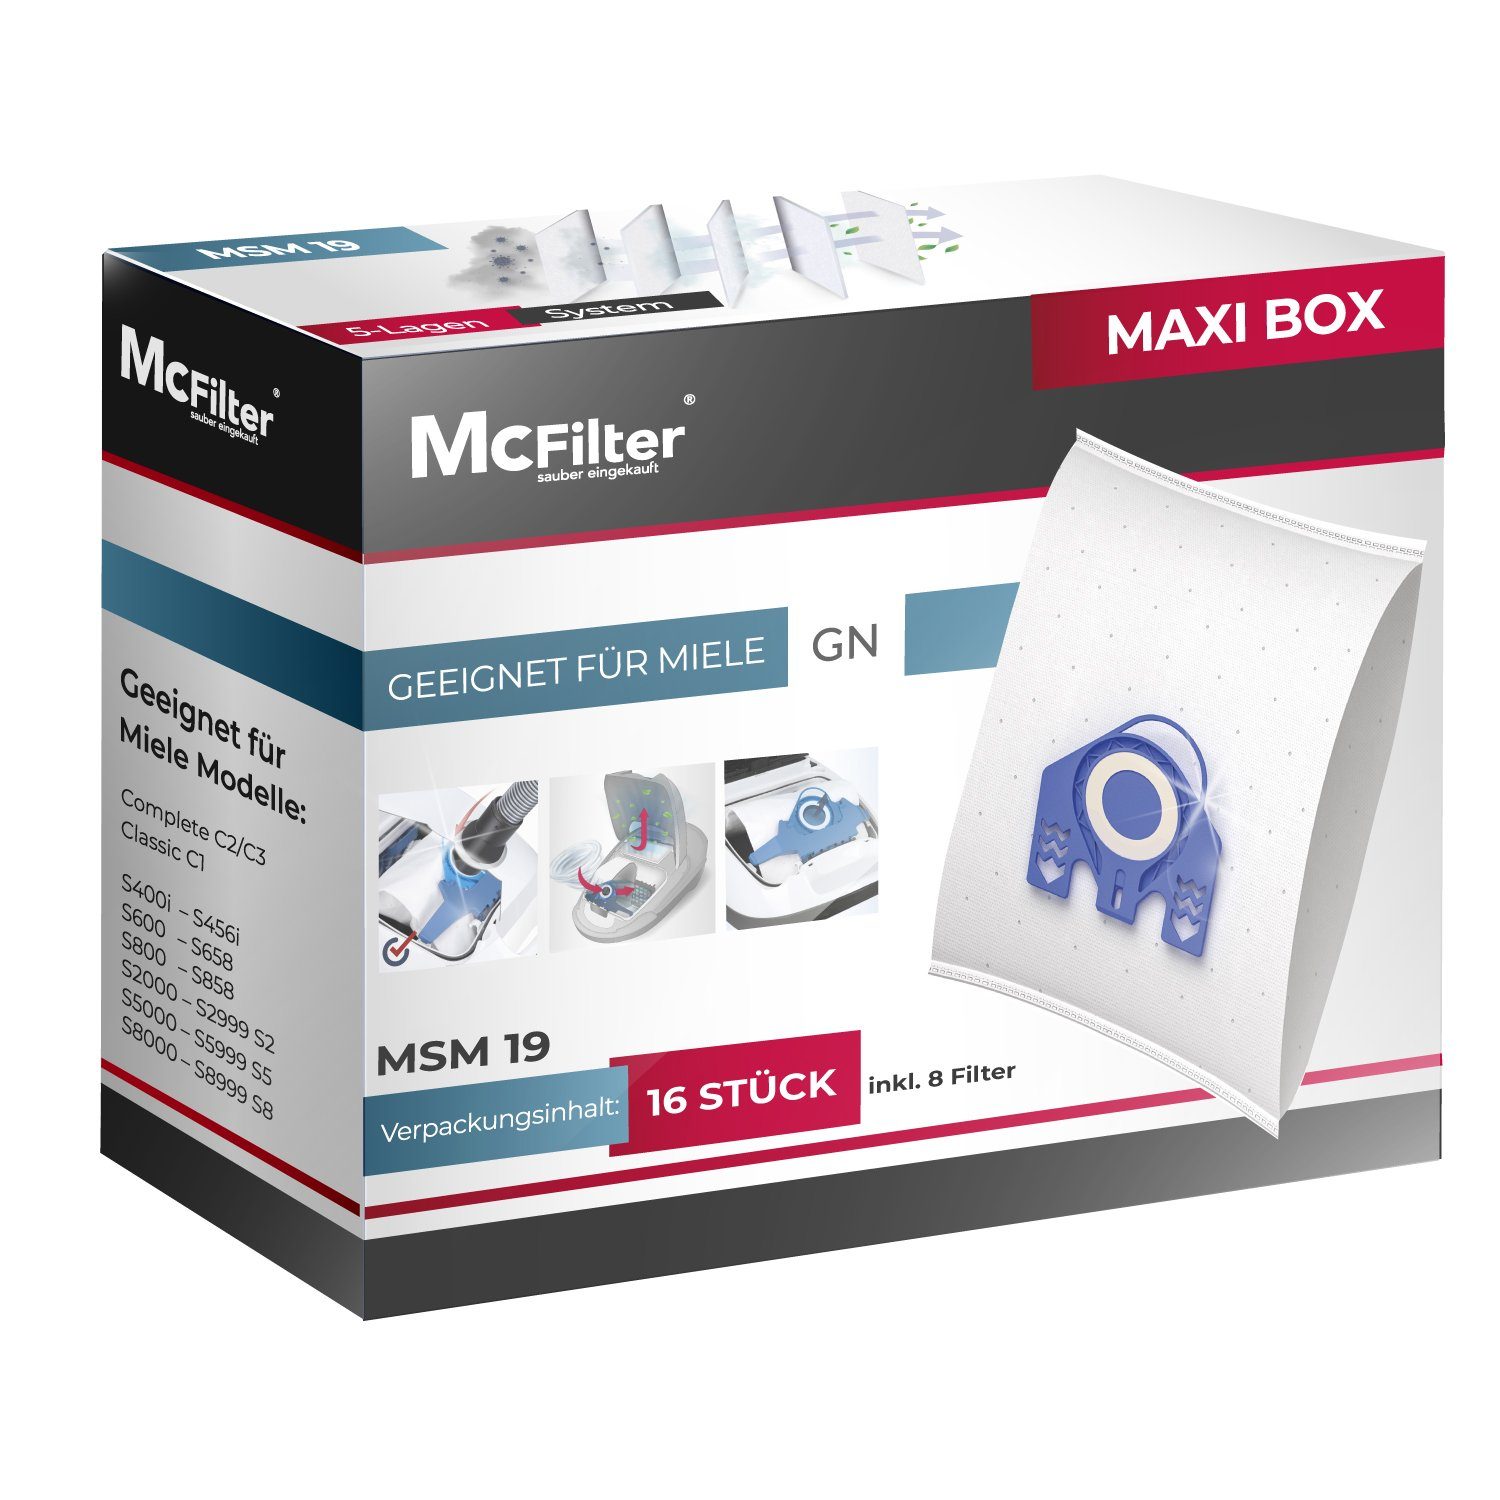 McFilter Staubsaugerbeutel >MAXI BOX< (16+8), passend für Miele Electronic 2100 / 2200 / 2210 Staubsauger, inkl. 8 Filter, 16 St., Top Alternative zu 9917730, wie Miele 10408410